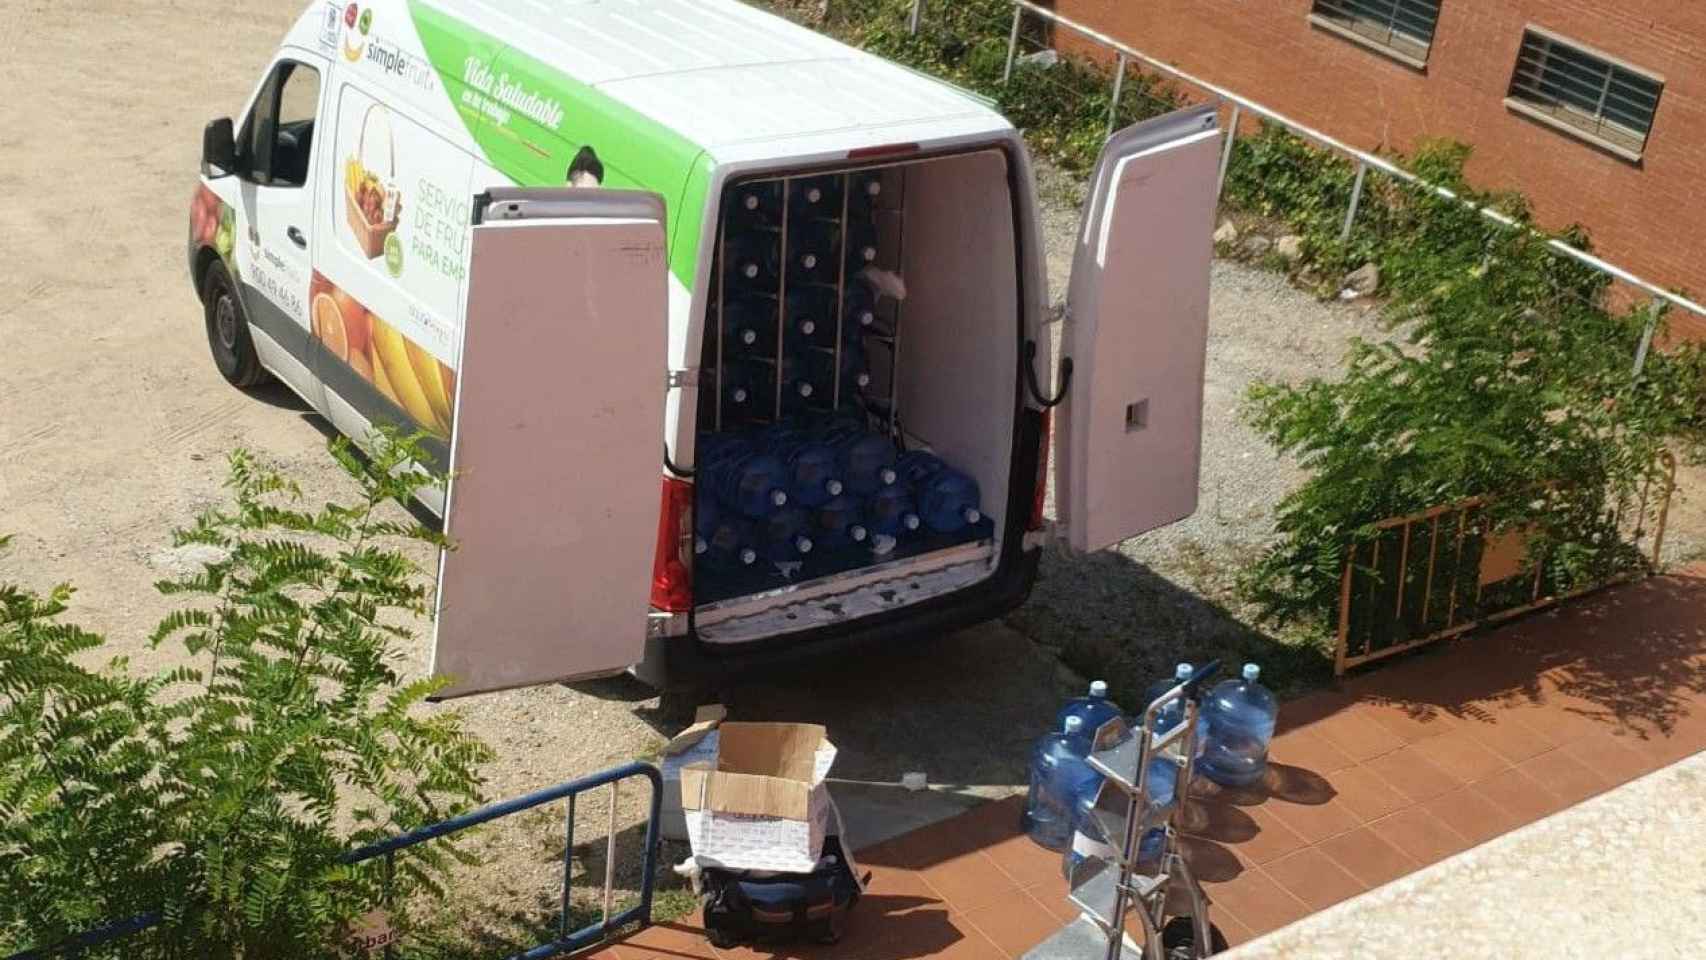 La empresa Acquajet retira garrafas de agua llenas de la Guardia Urbana de Badalona / @RAULITObdn